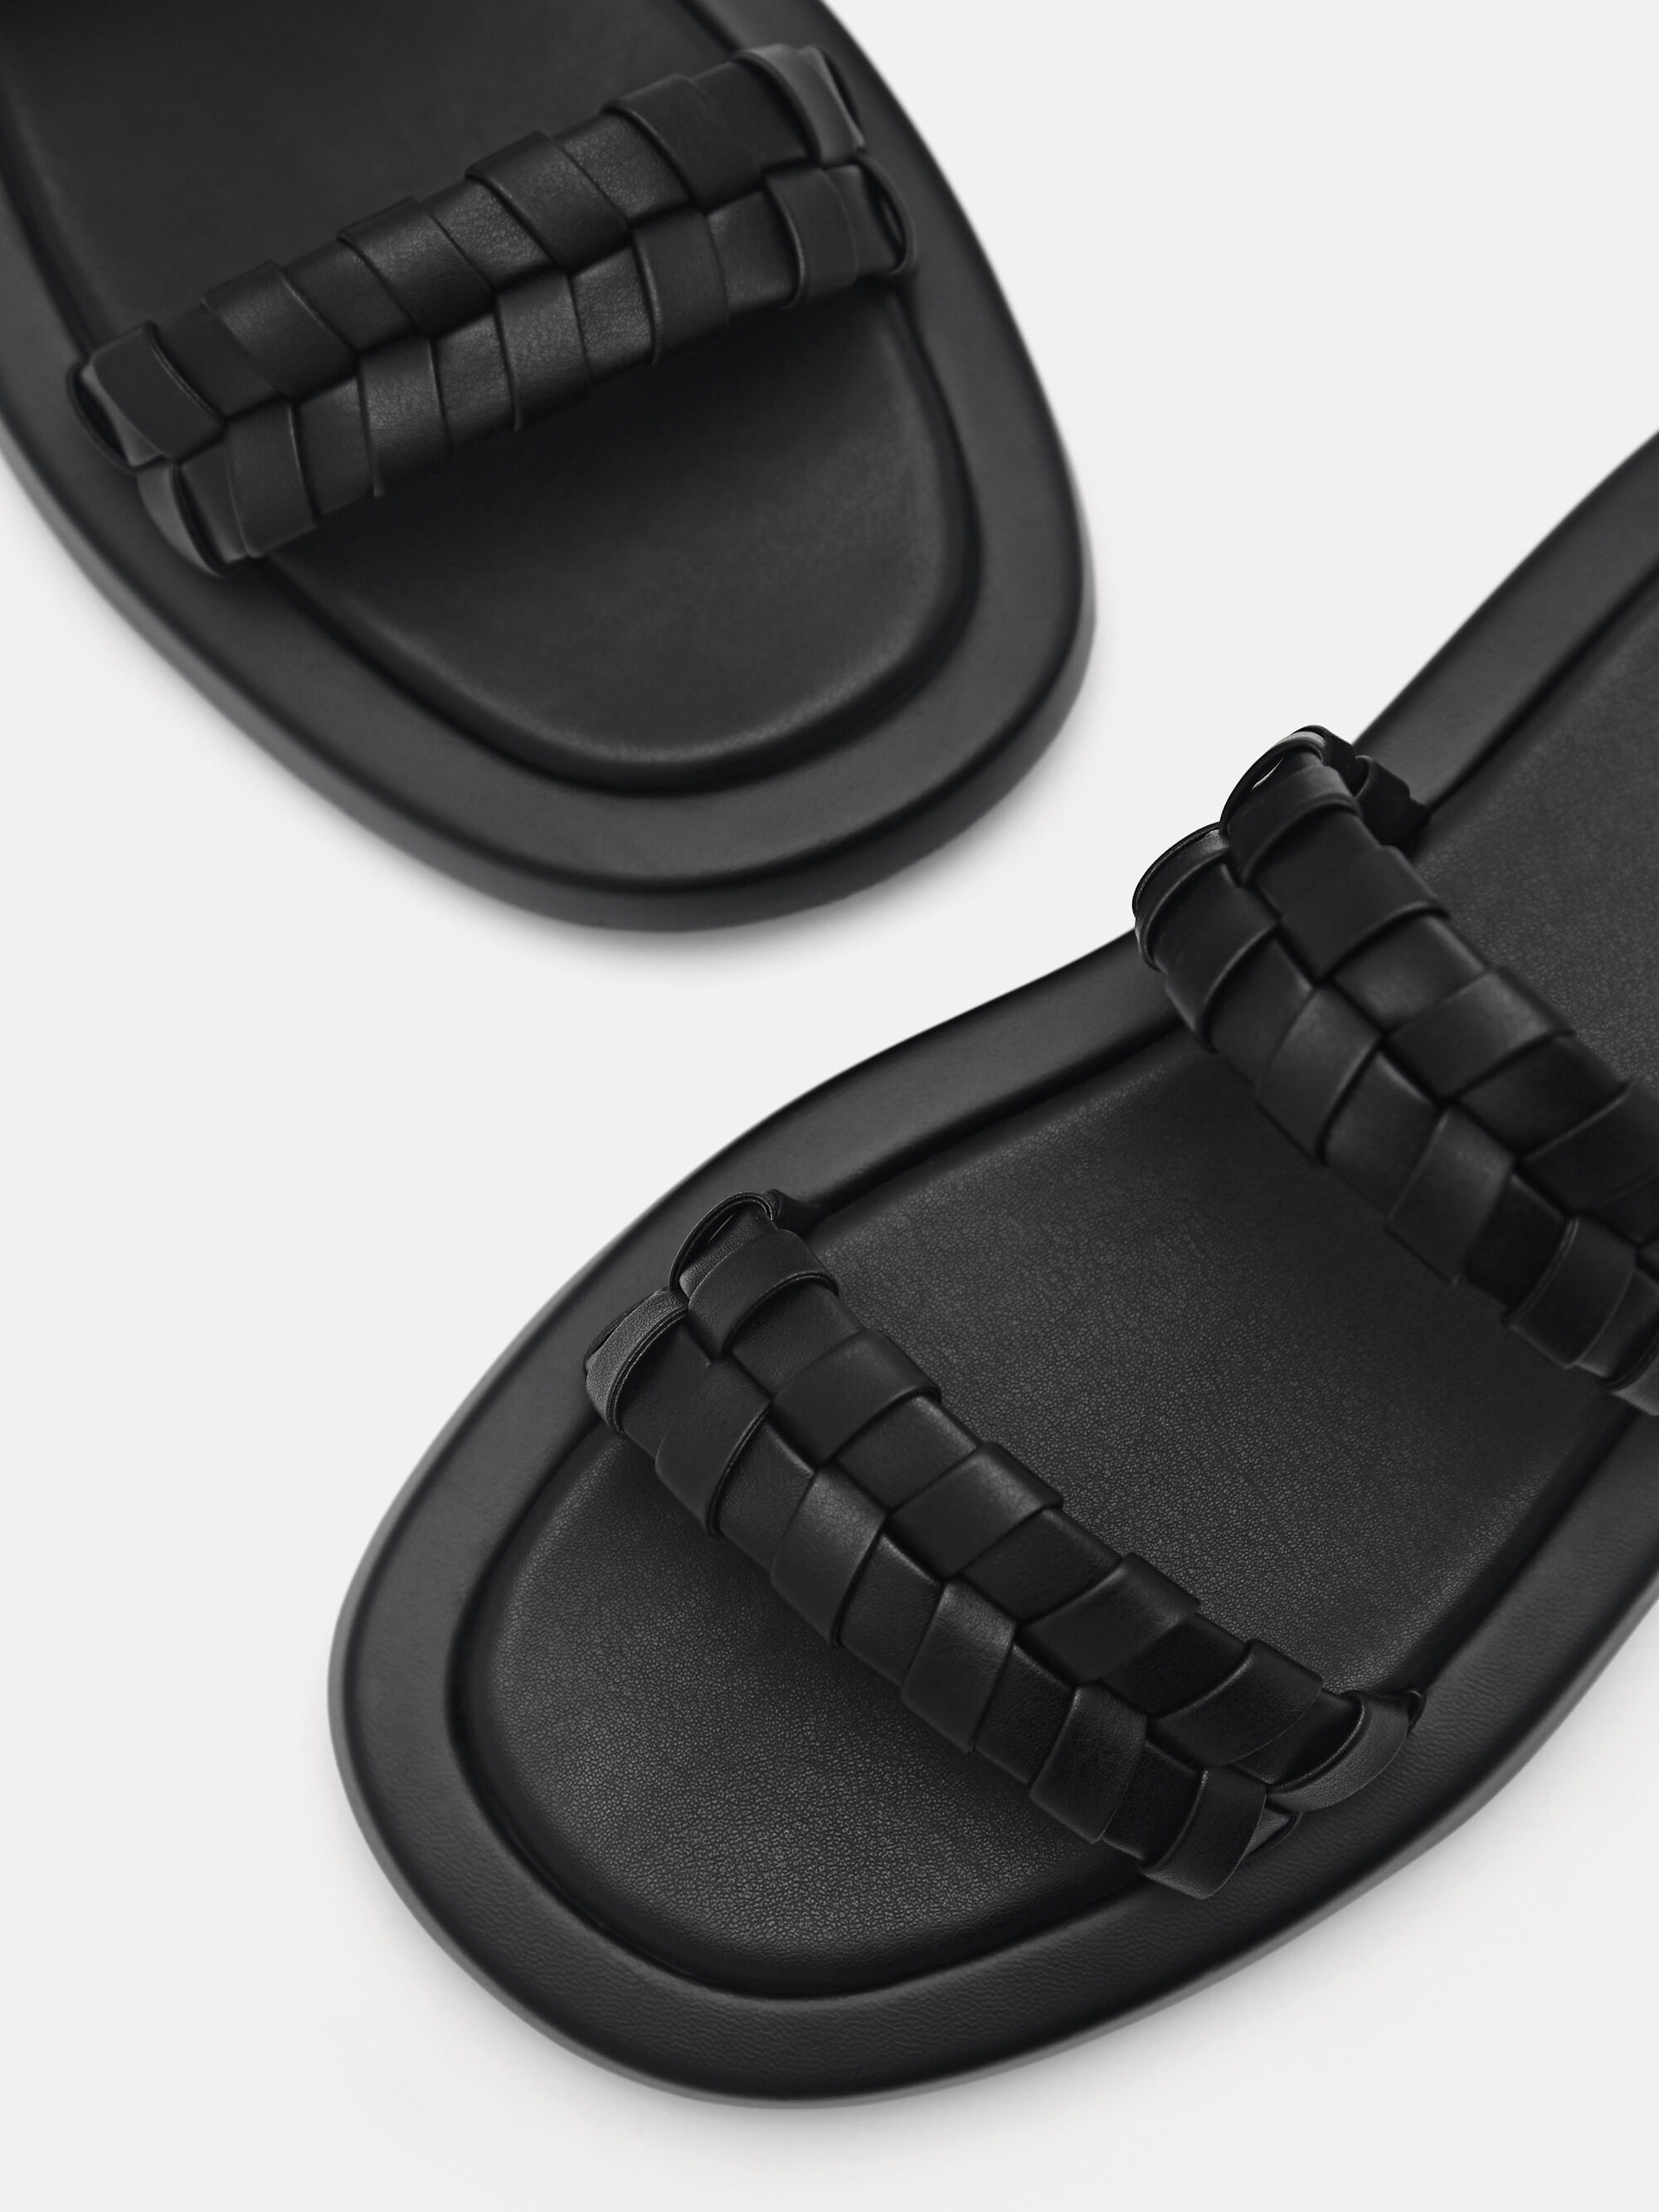 Palma Woven Sandals, Black